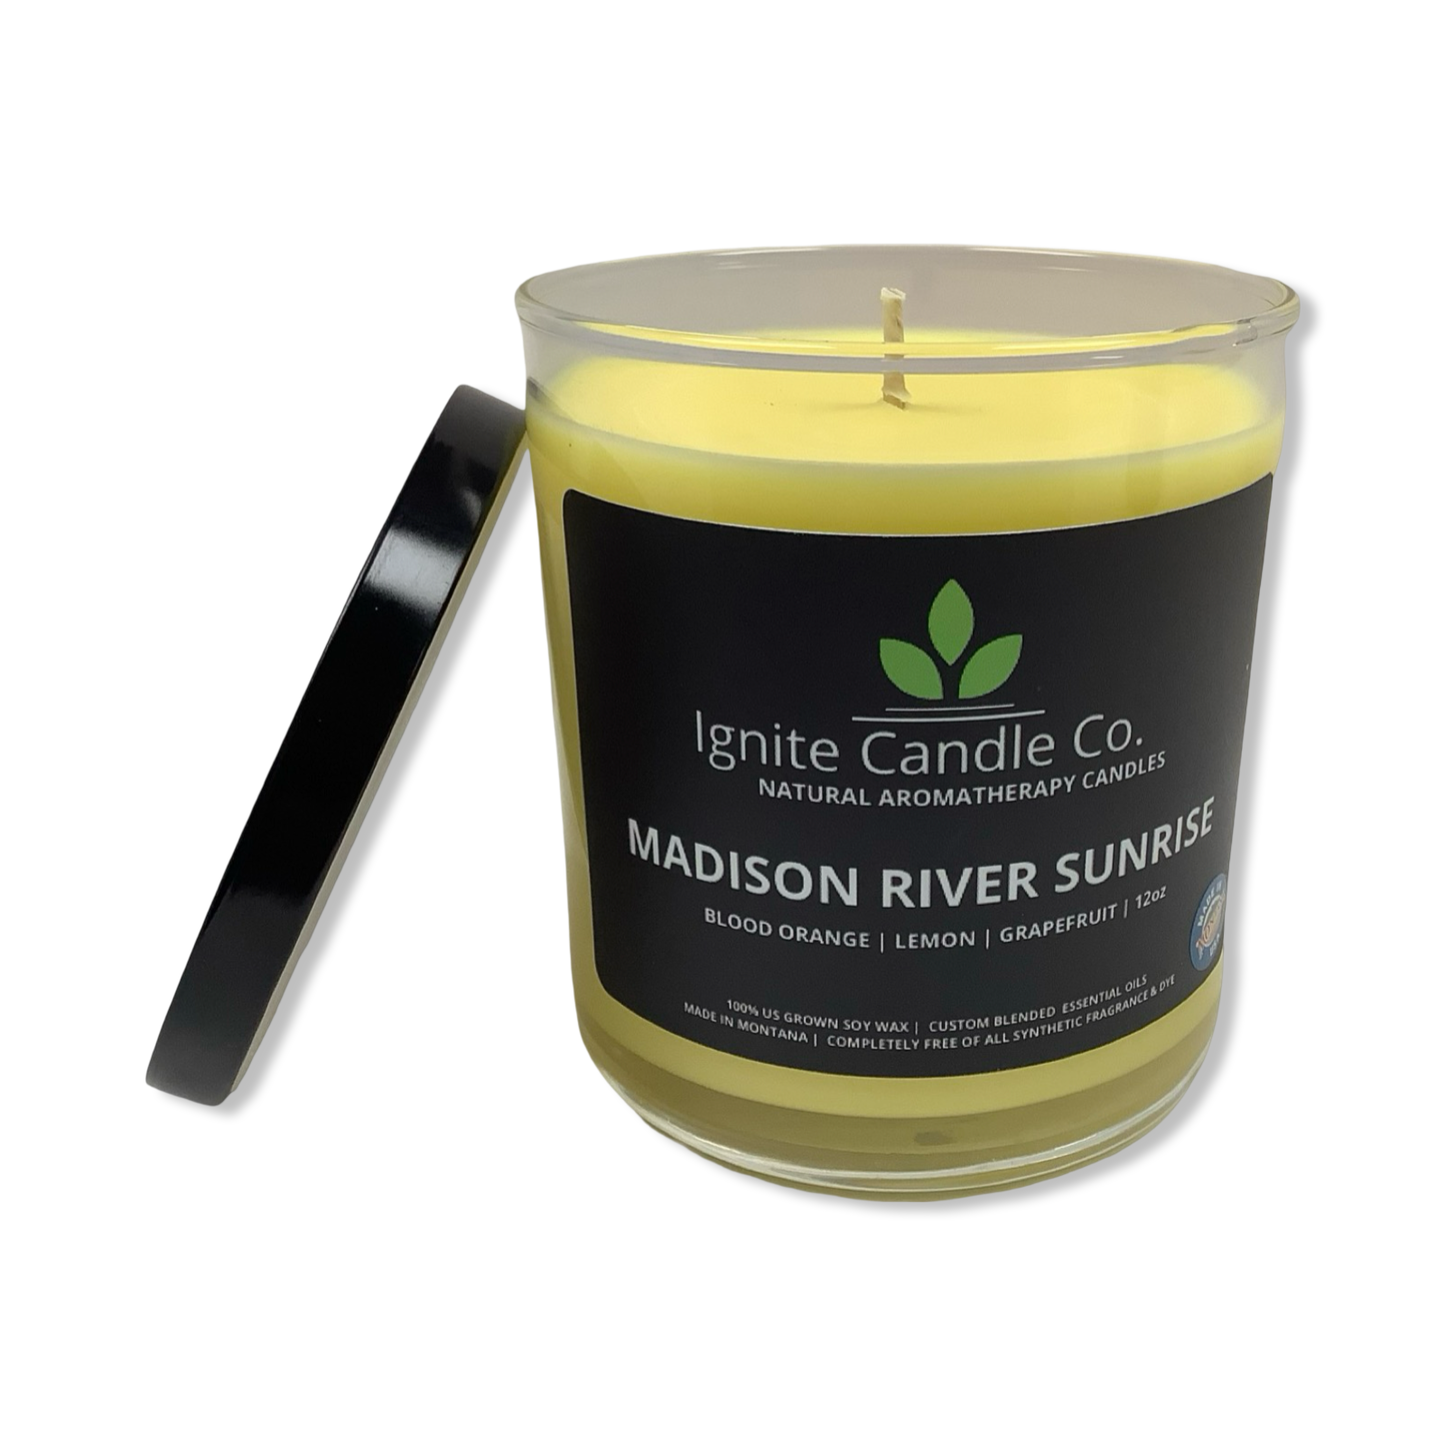 Madison River Sunrise - Ignite Candle Co.